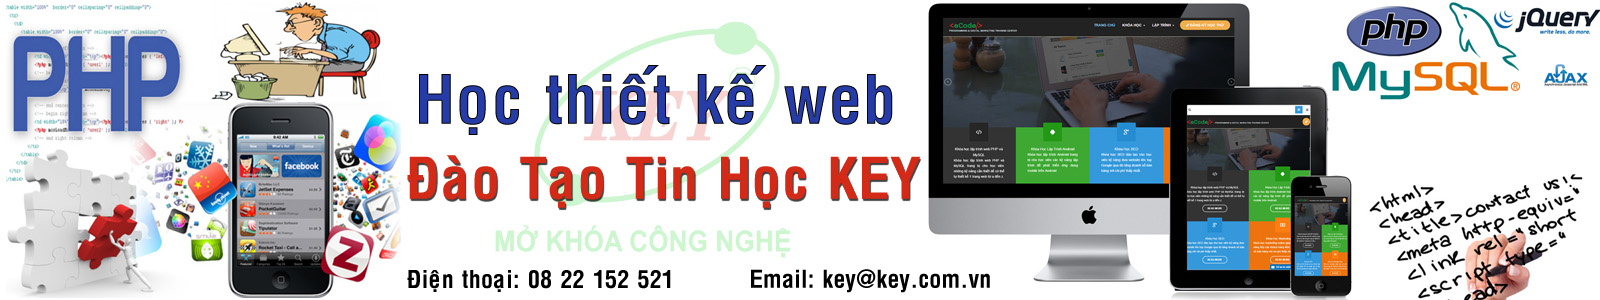 hoc thiet ke web | dao tao tin hoc key